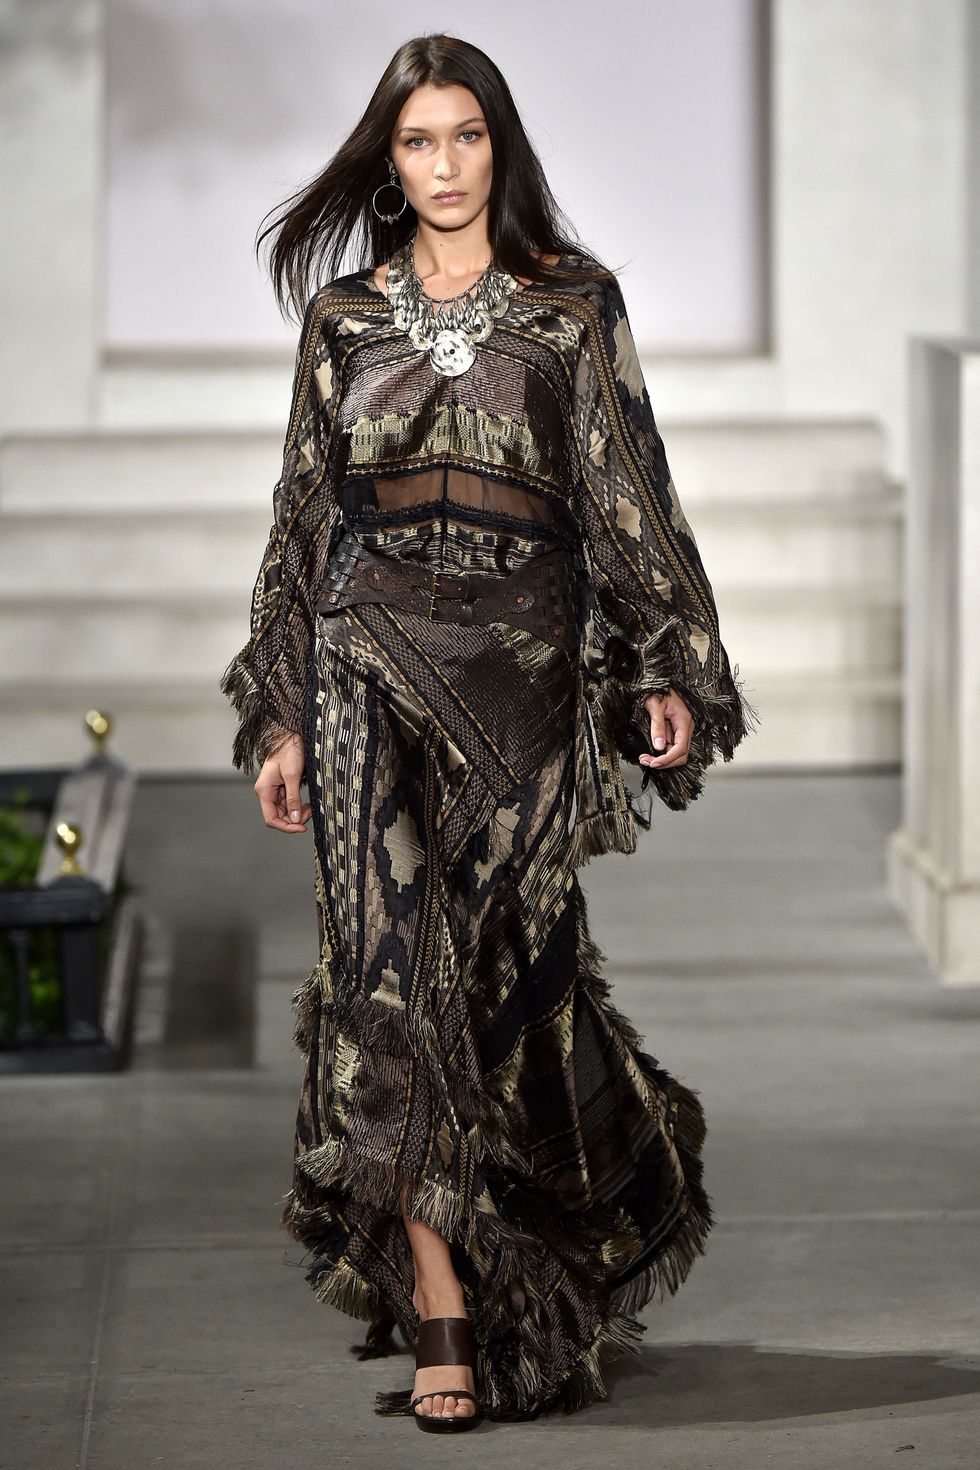 Bella Hadid for Ralph Lauren, New York Fashion Week SS17